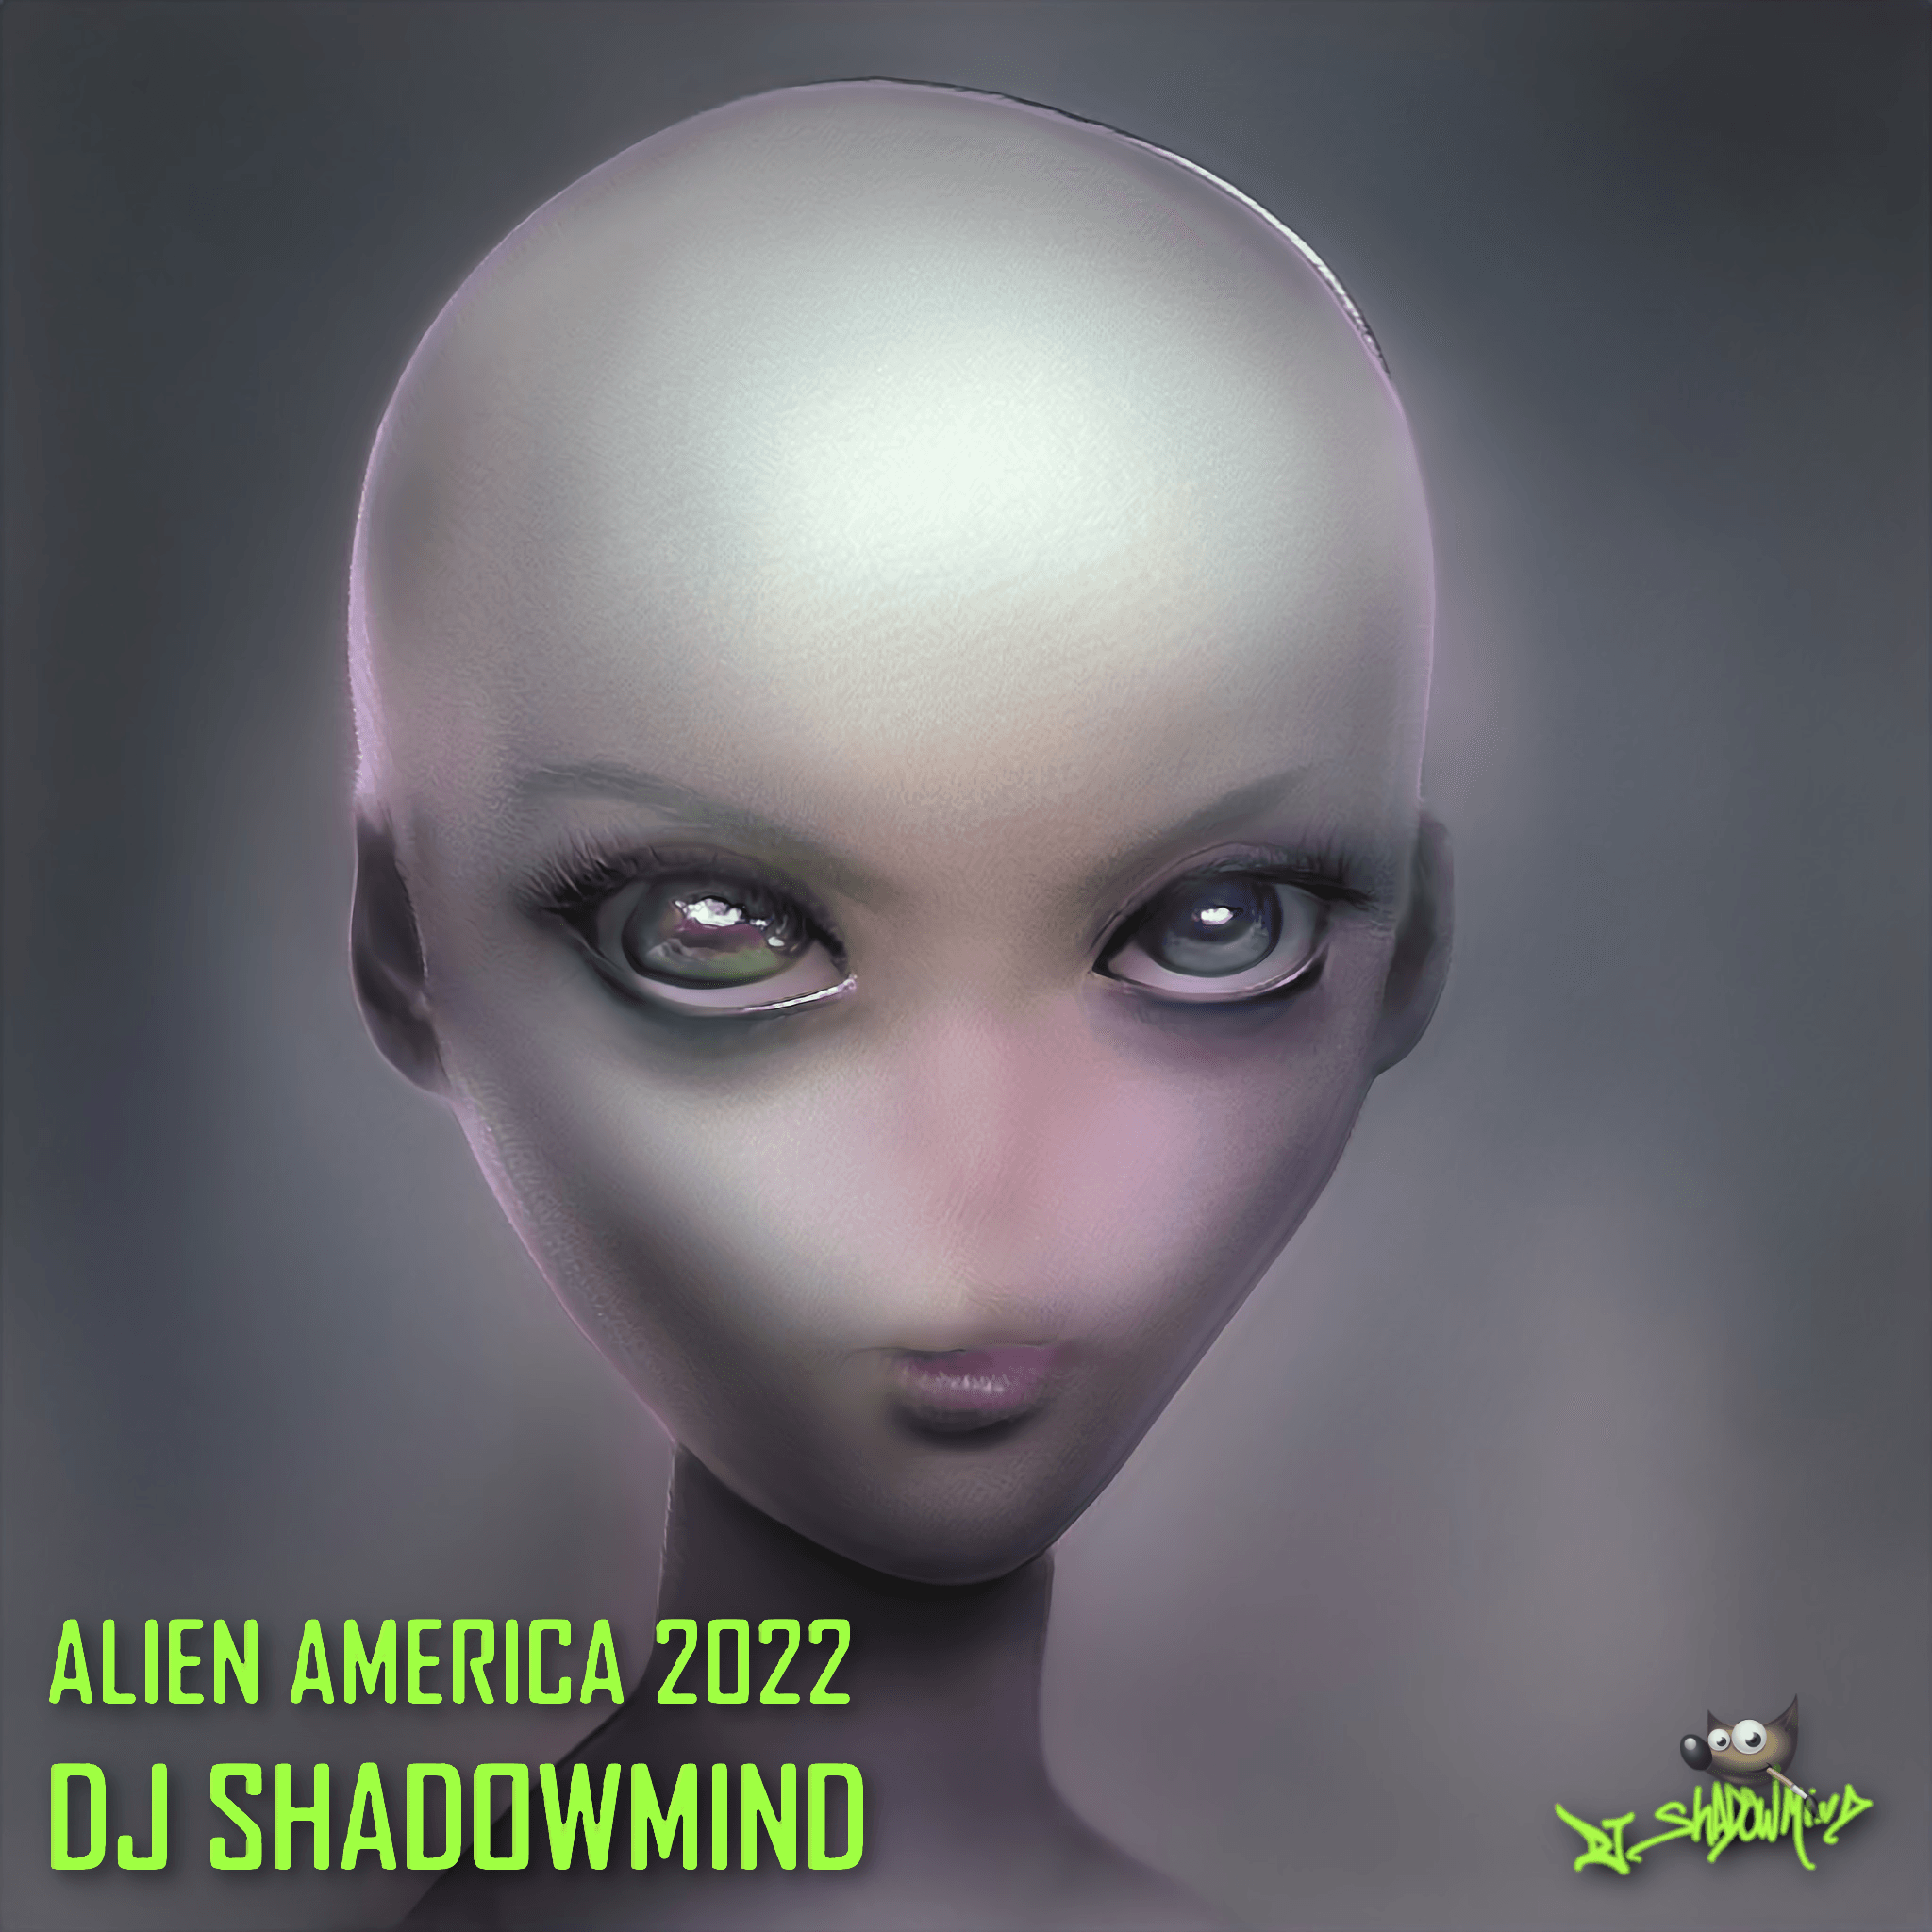 Alien America 2022 - Agent 001